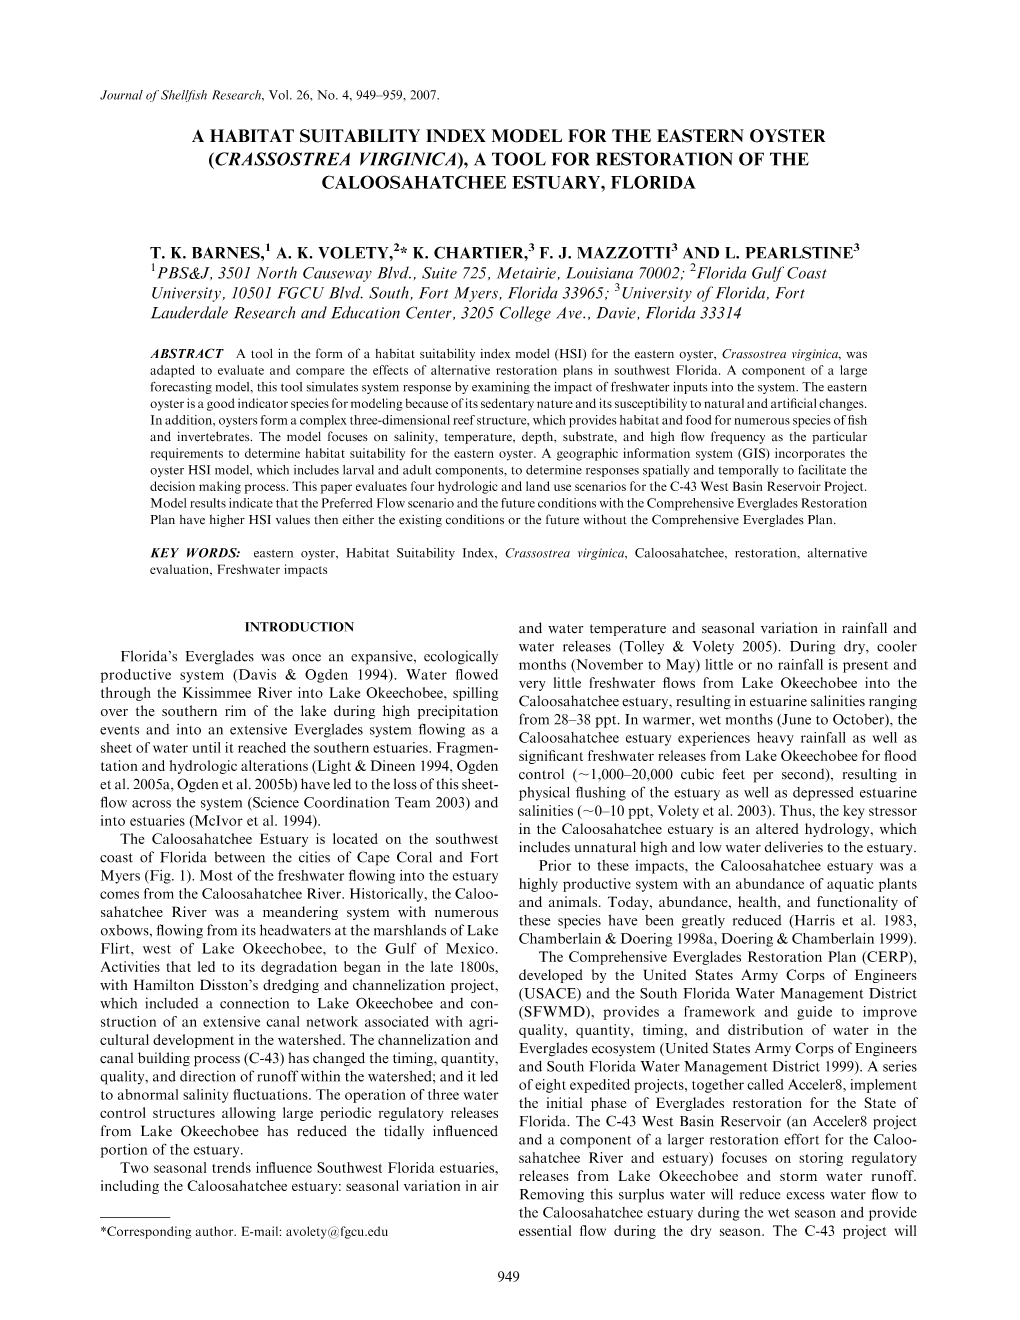 A Habitat Suitability Index Model for the Eastern Oyster (Crassostrea Virginica), a Tool for Restoration of the Caloosahatchee Estuary, Florida